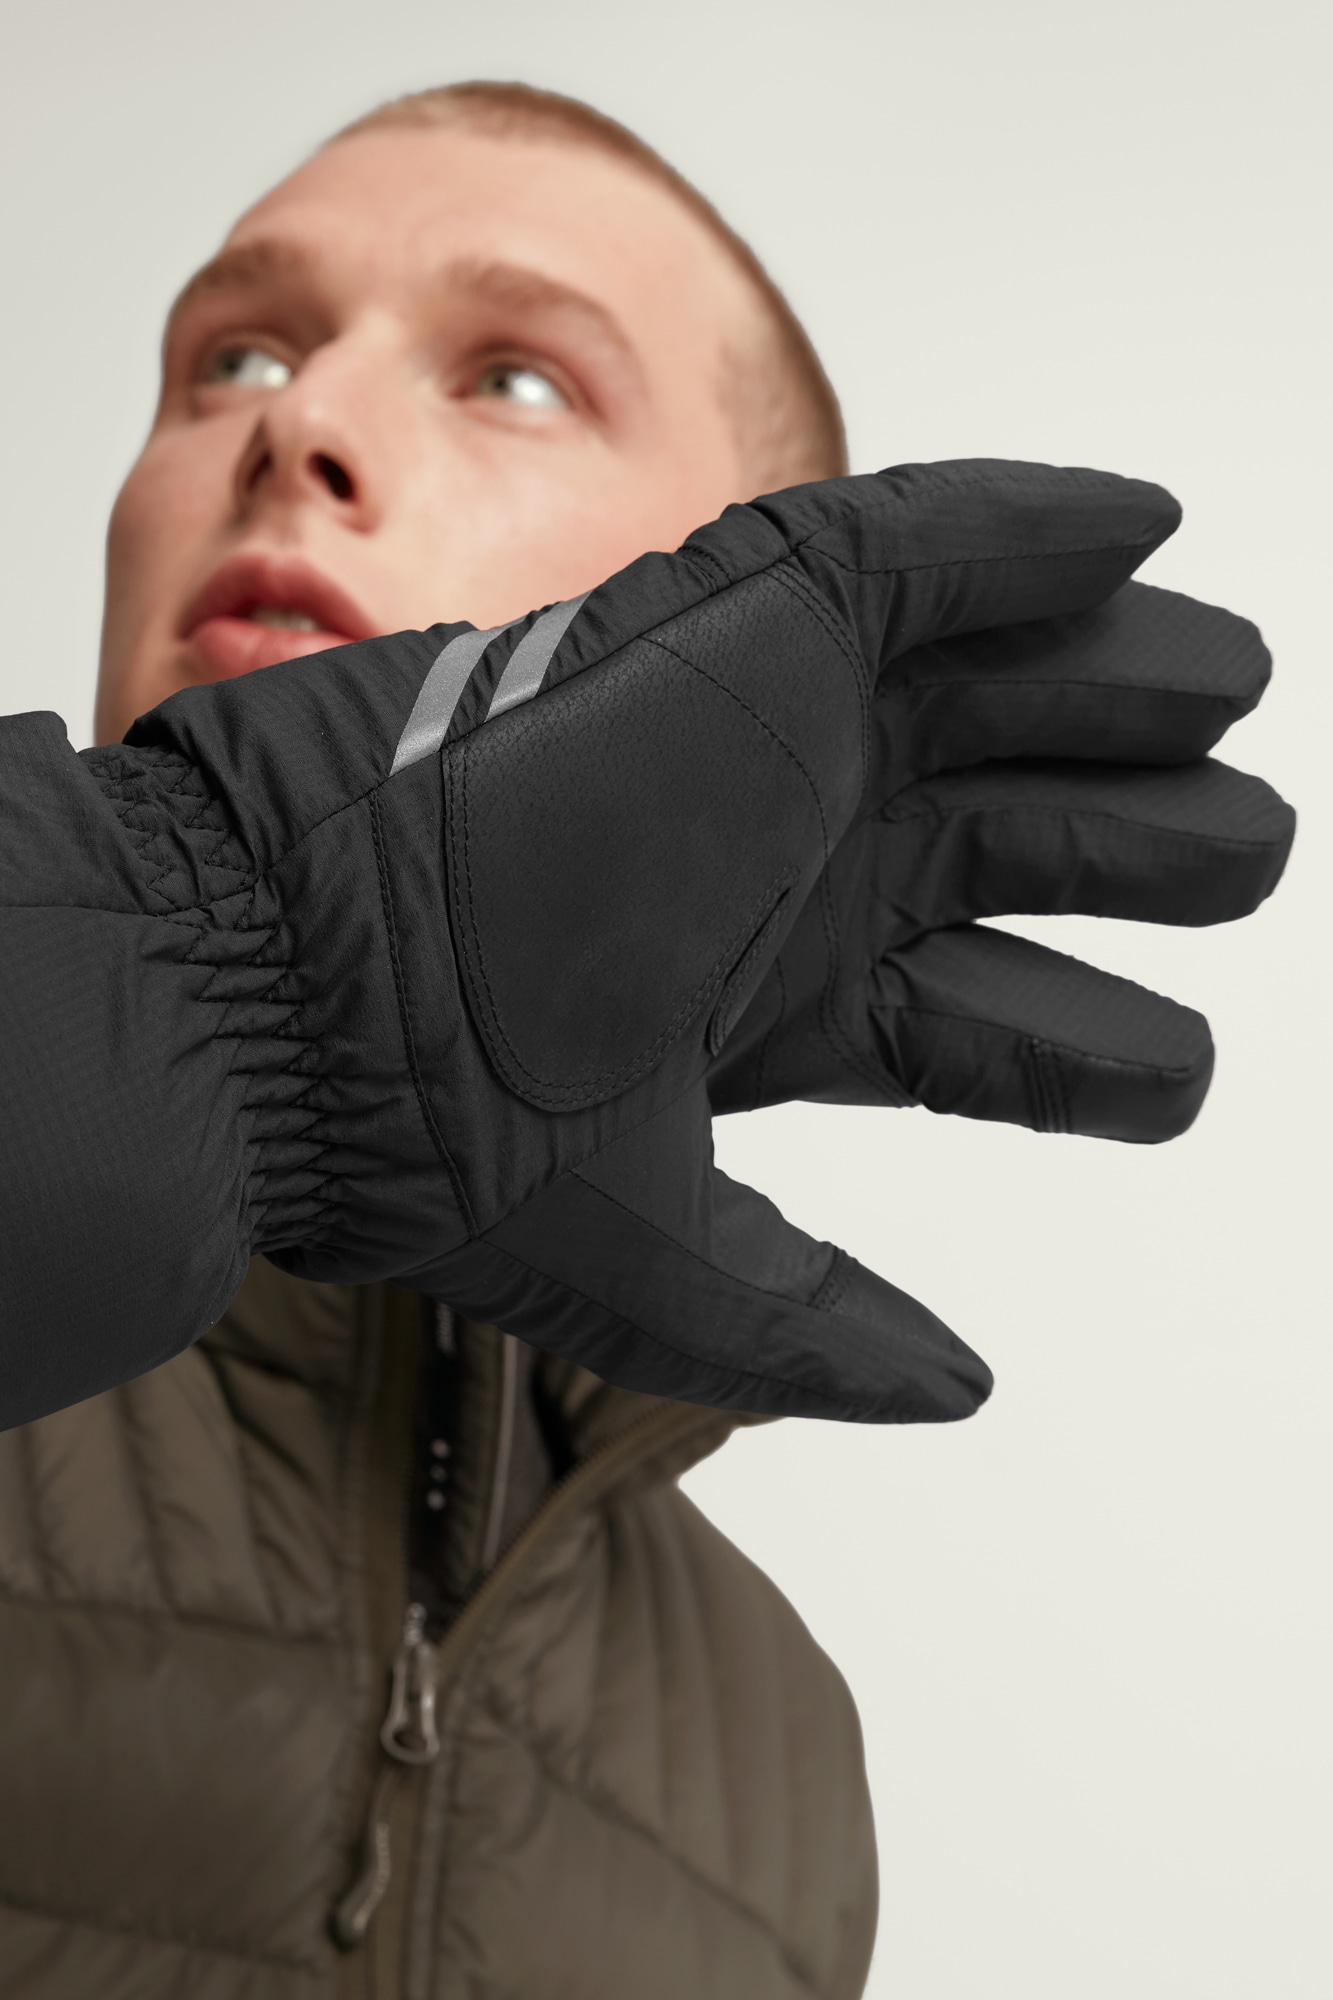 canada gloves